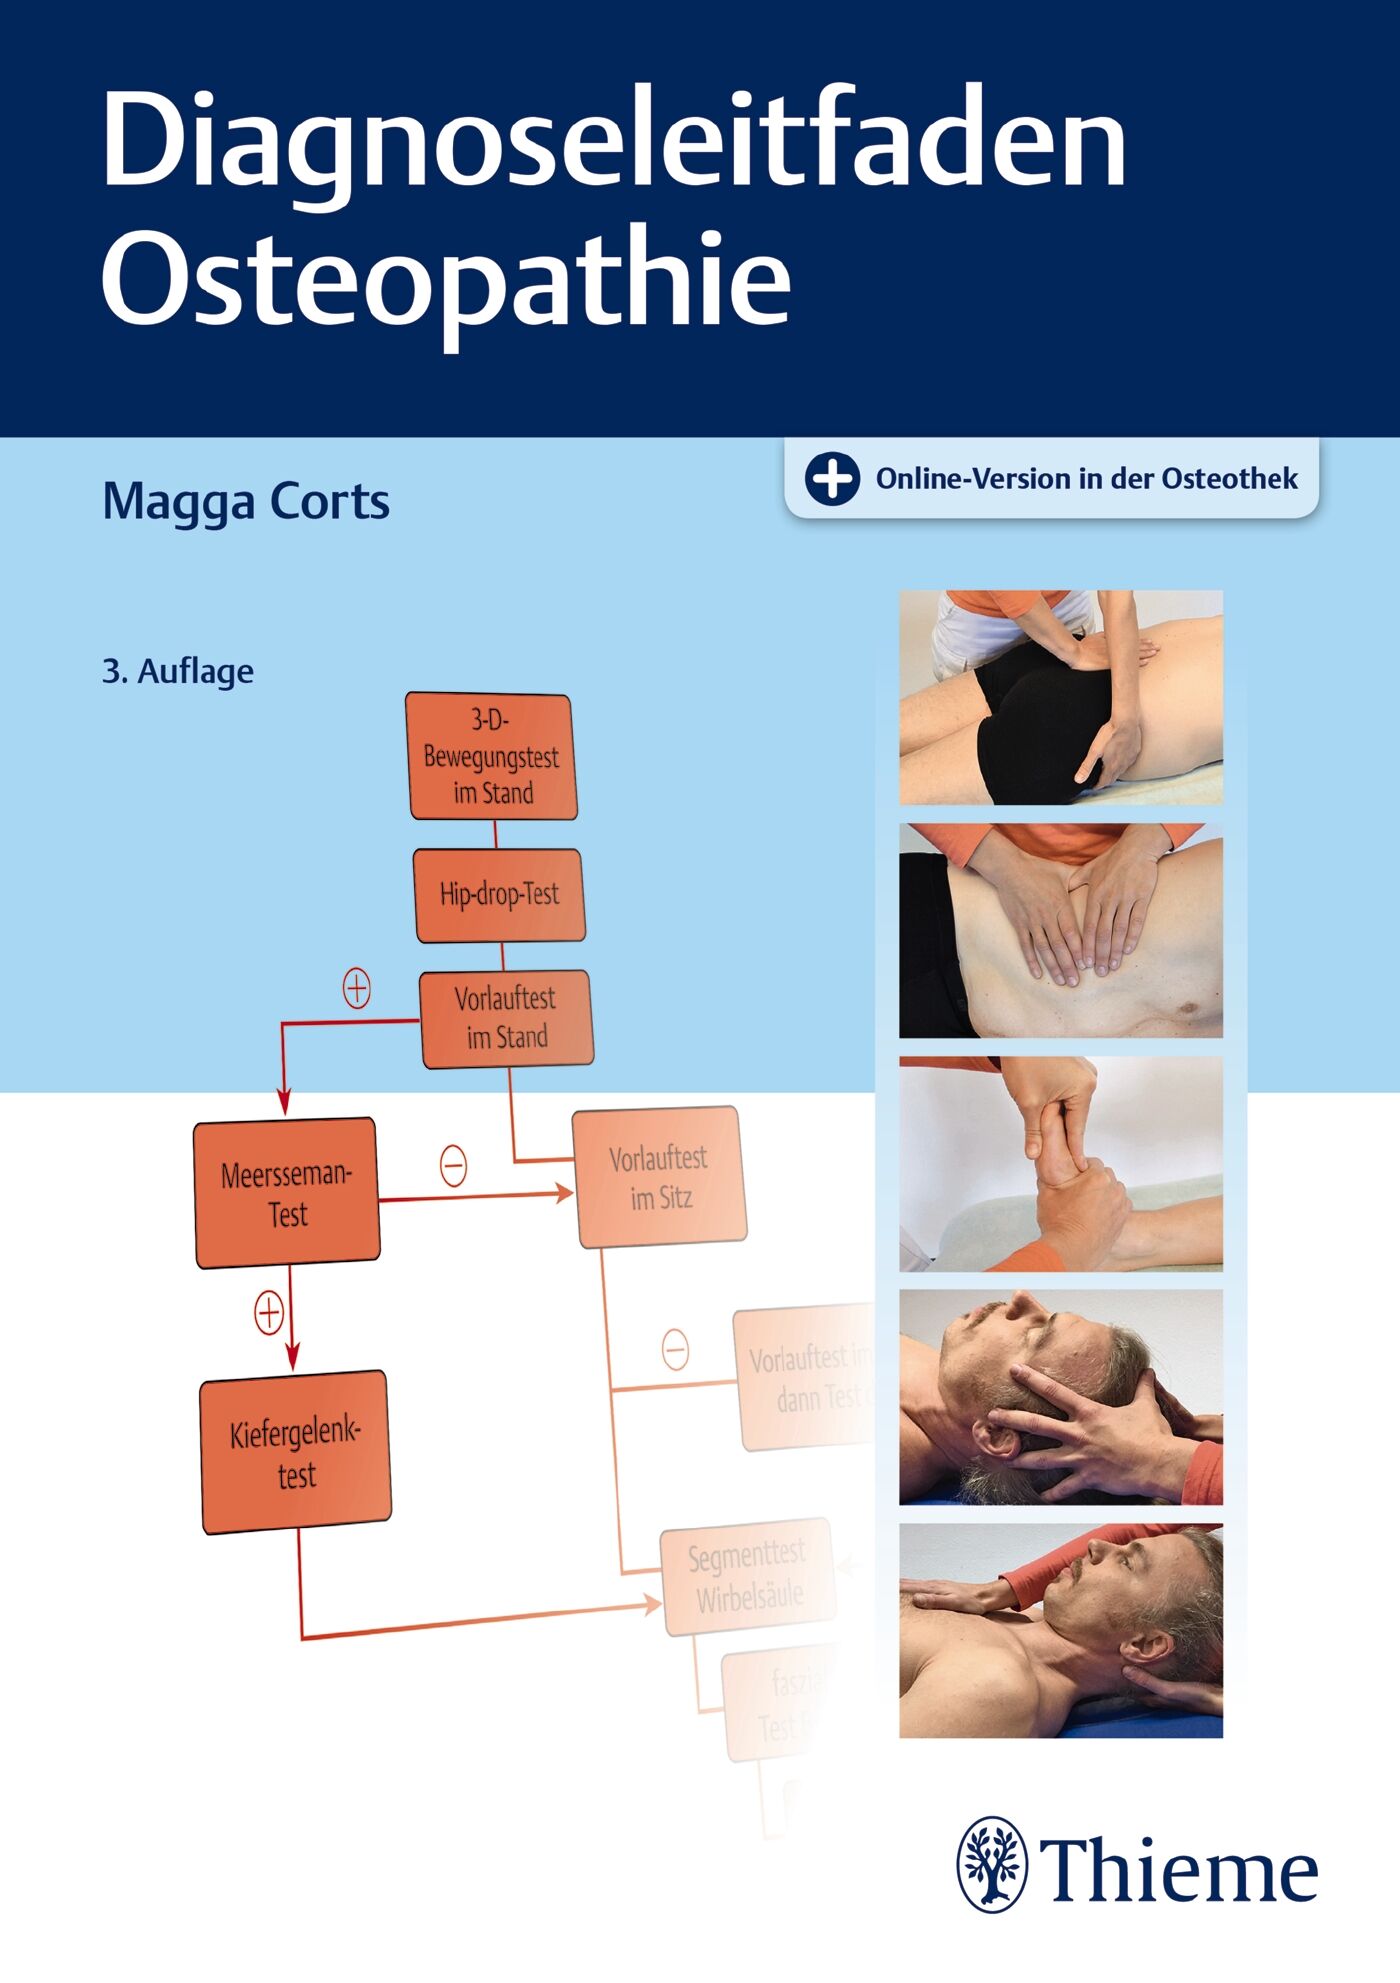 Diagnoseleitfaden Osteopathie, 9783132432291